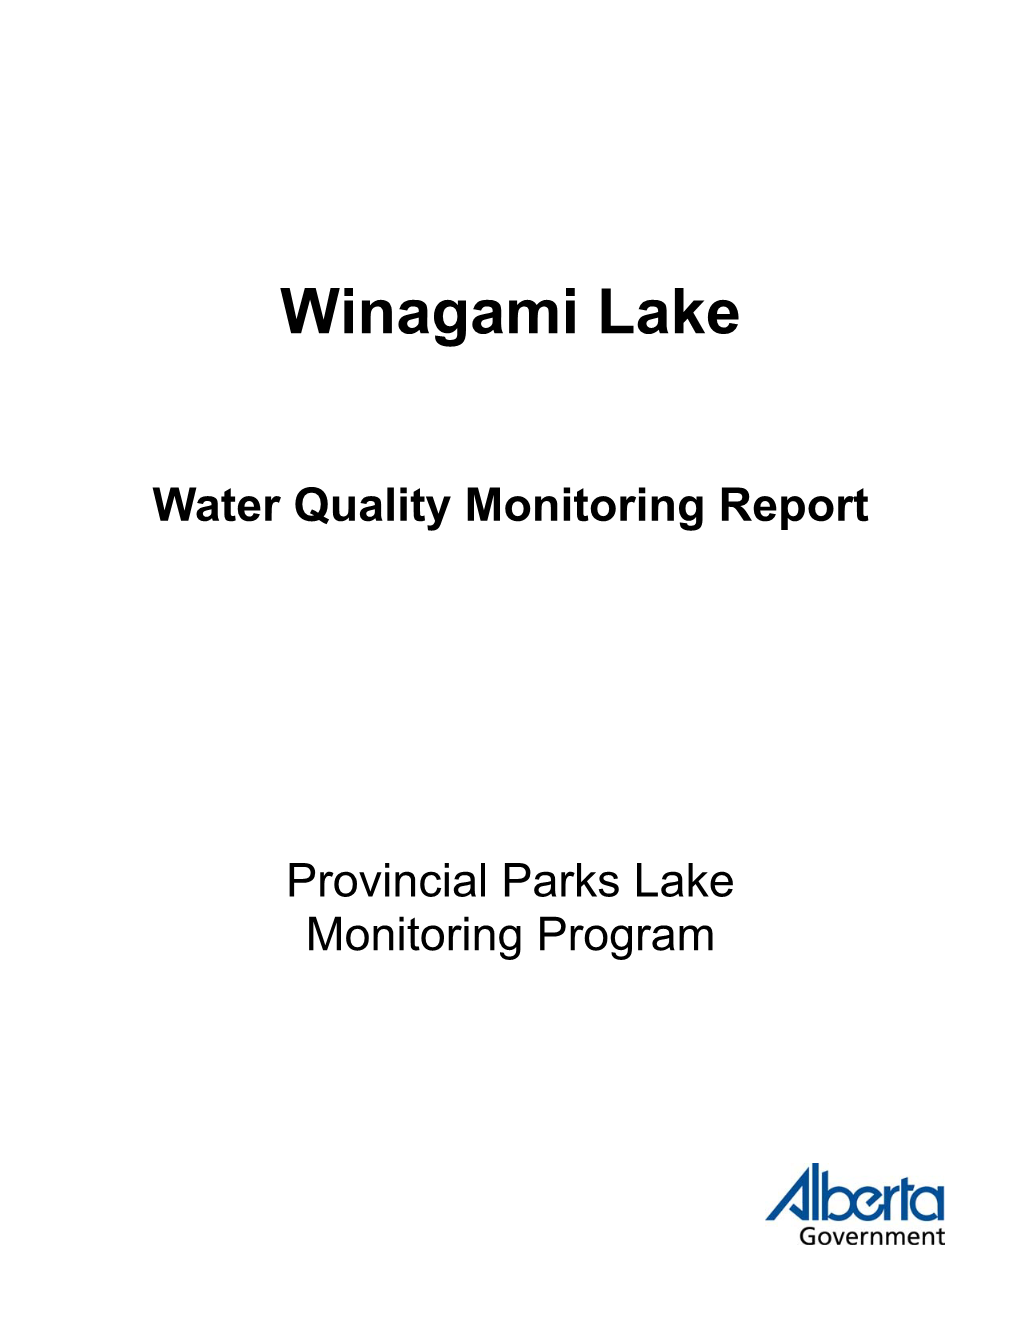 Provincial Parks Lake Monitoring Program